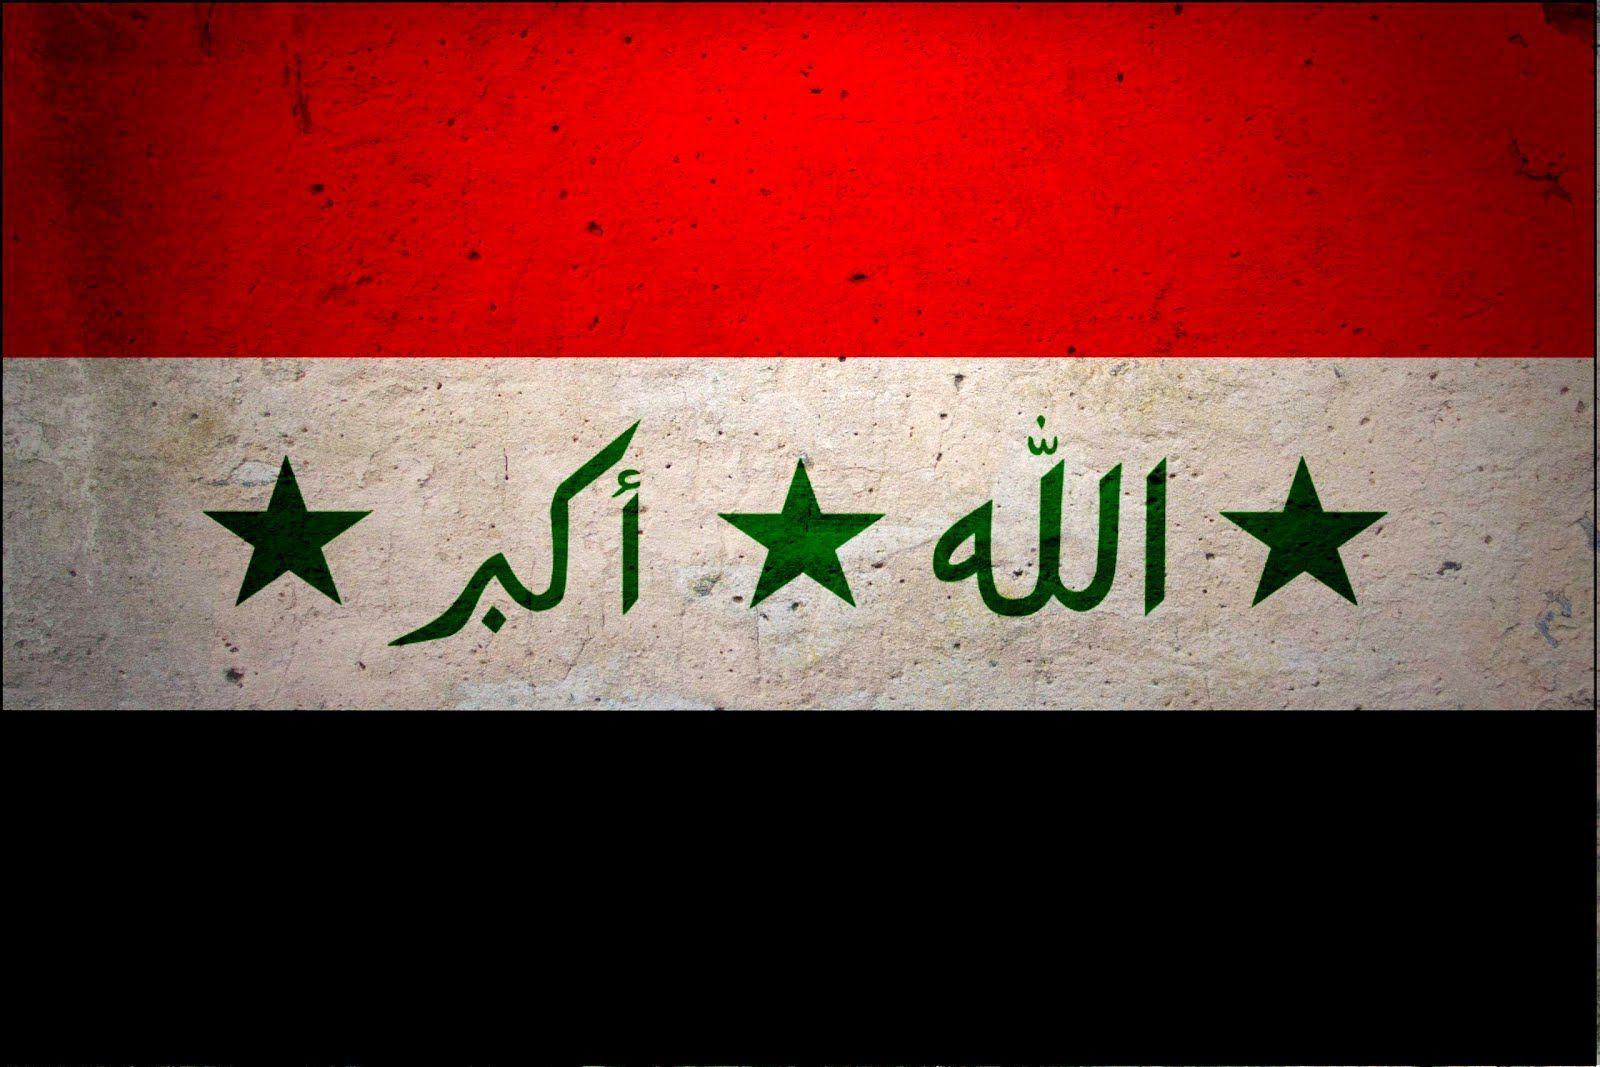 trololo blogg: Iraq Wallpaper